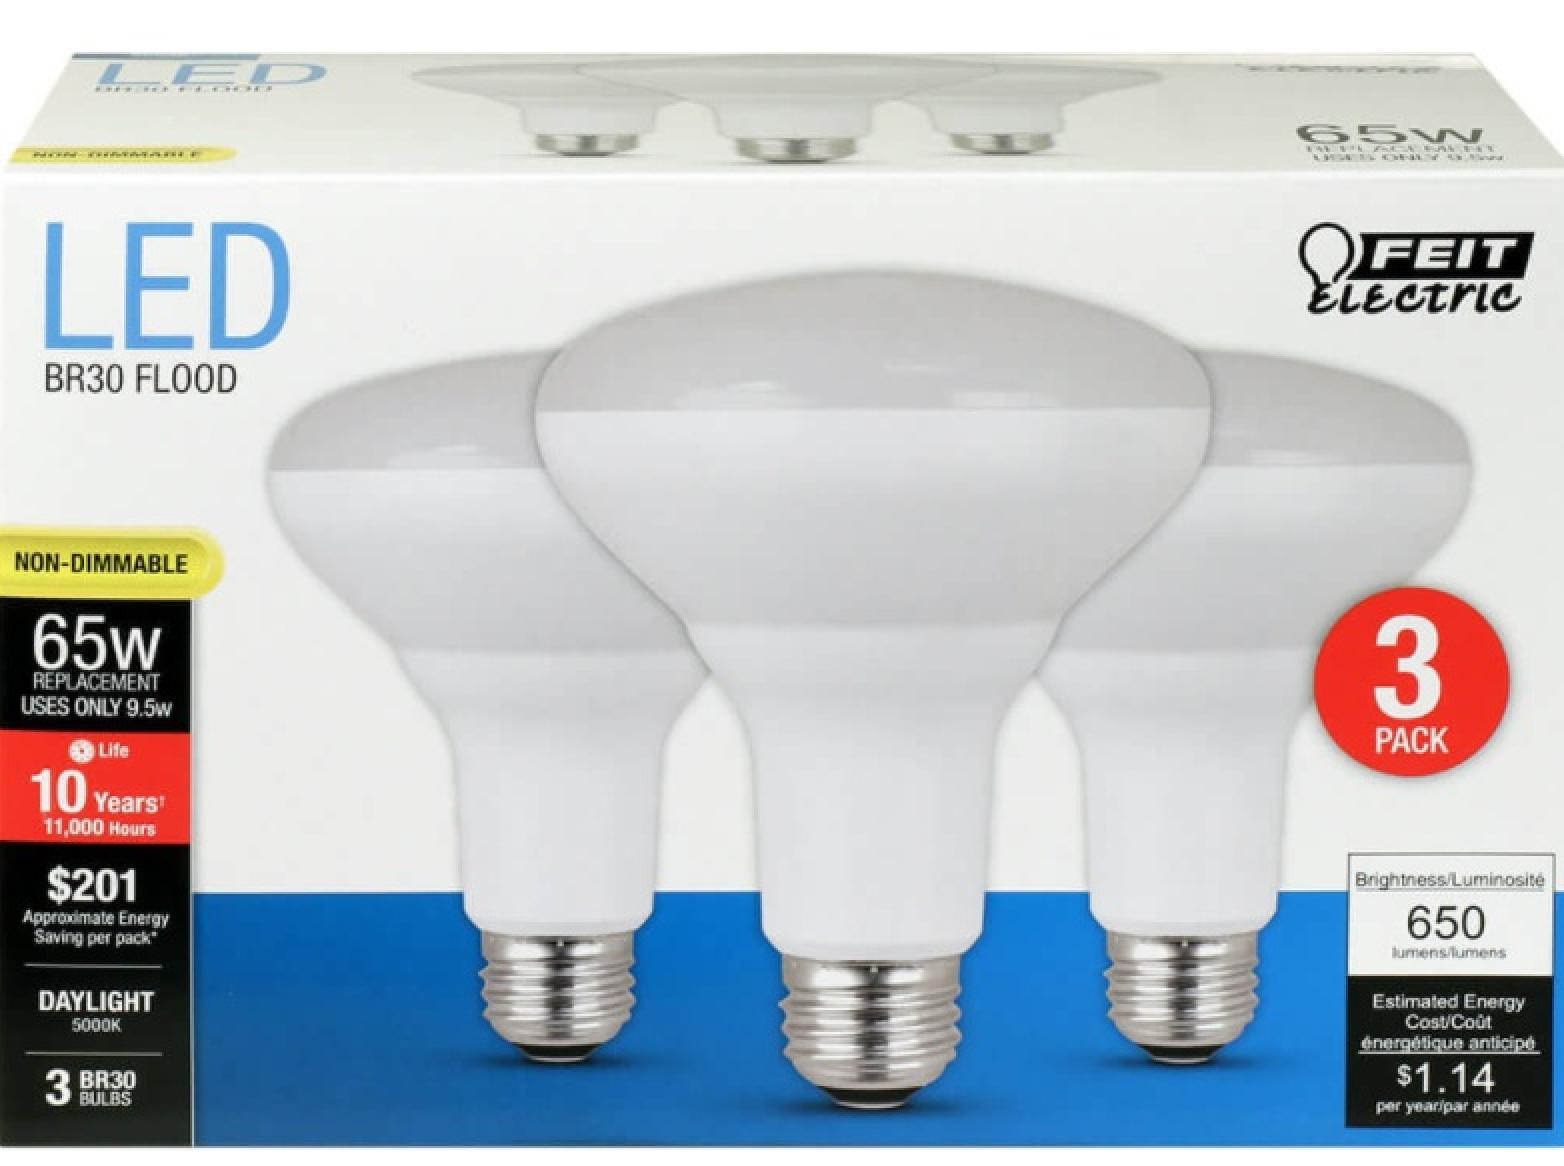 Feit Eclectic LED 65 Watt Equivalent 650 Lumen Non-Dimmable Reflector Light Bulb (3 Pack) 